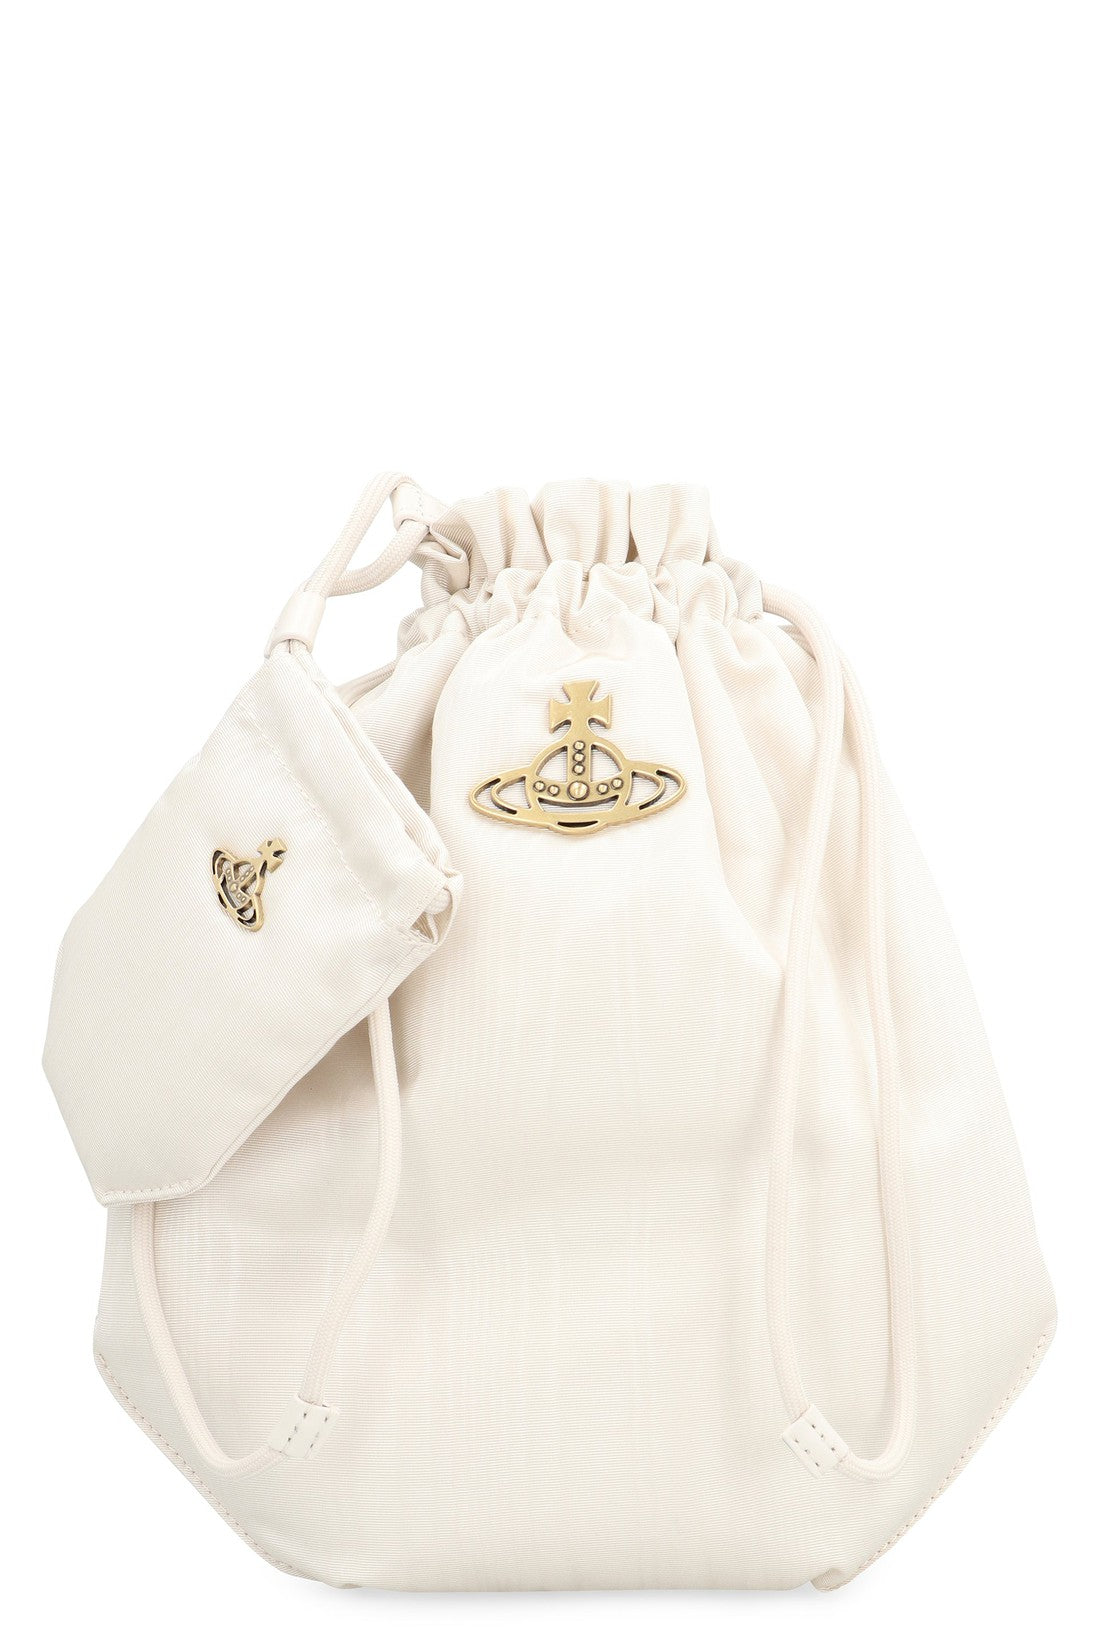 Vivienne Westwood-OUTLET-SALE-Fabric shoulder bag-ARCHIVIST